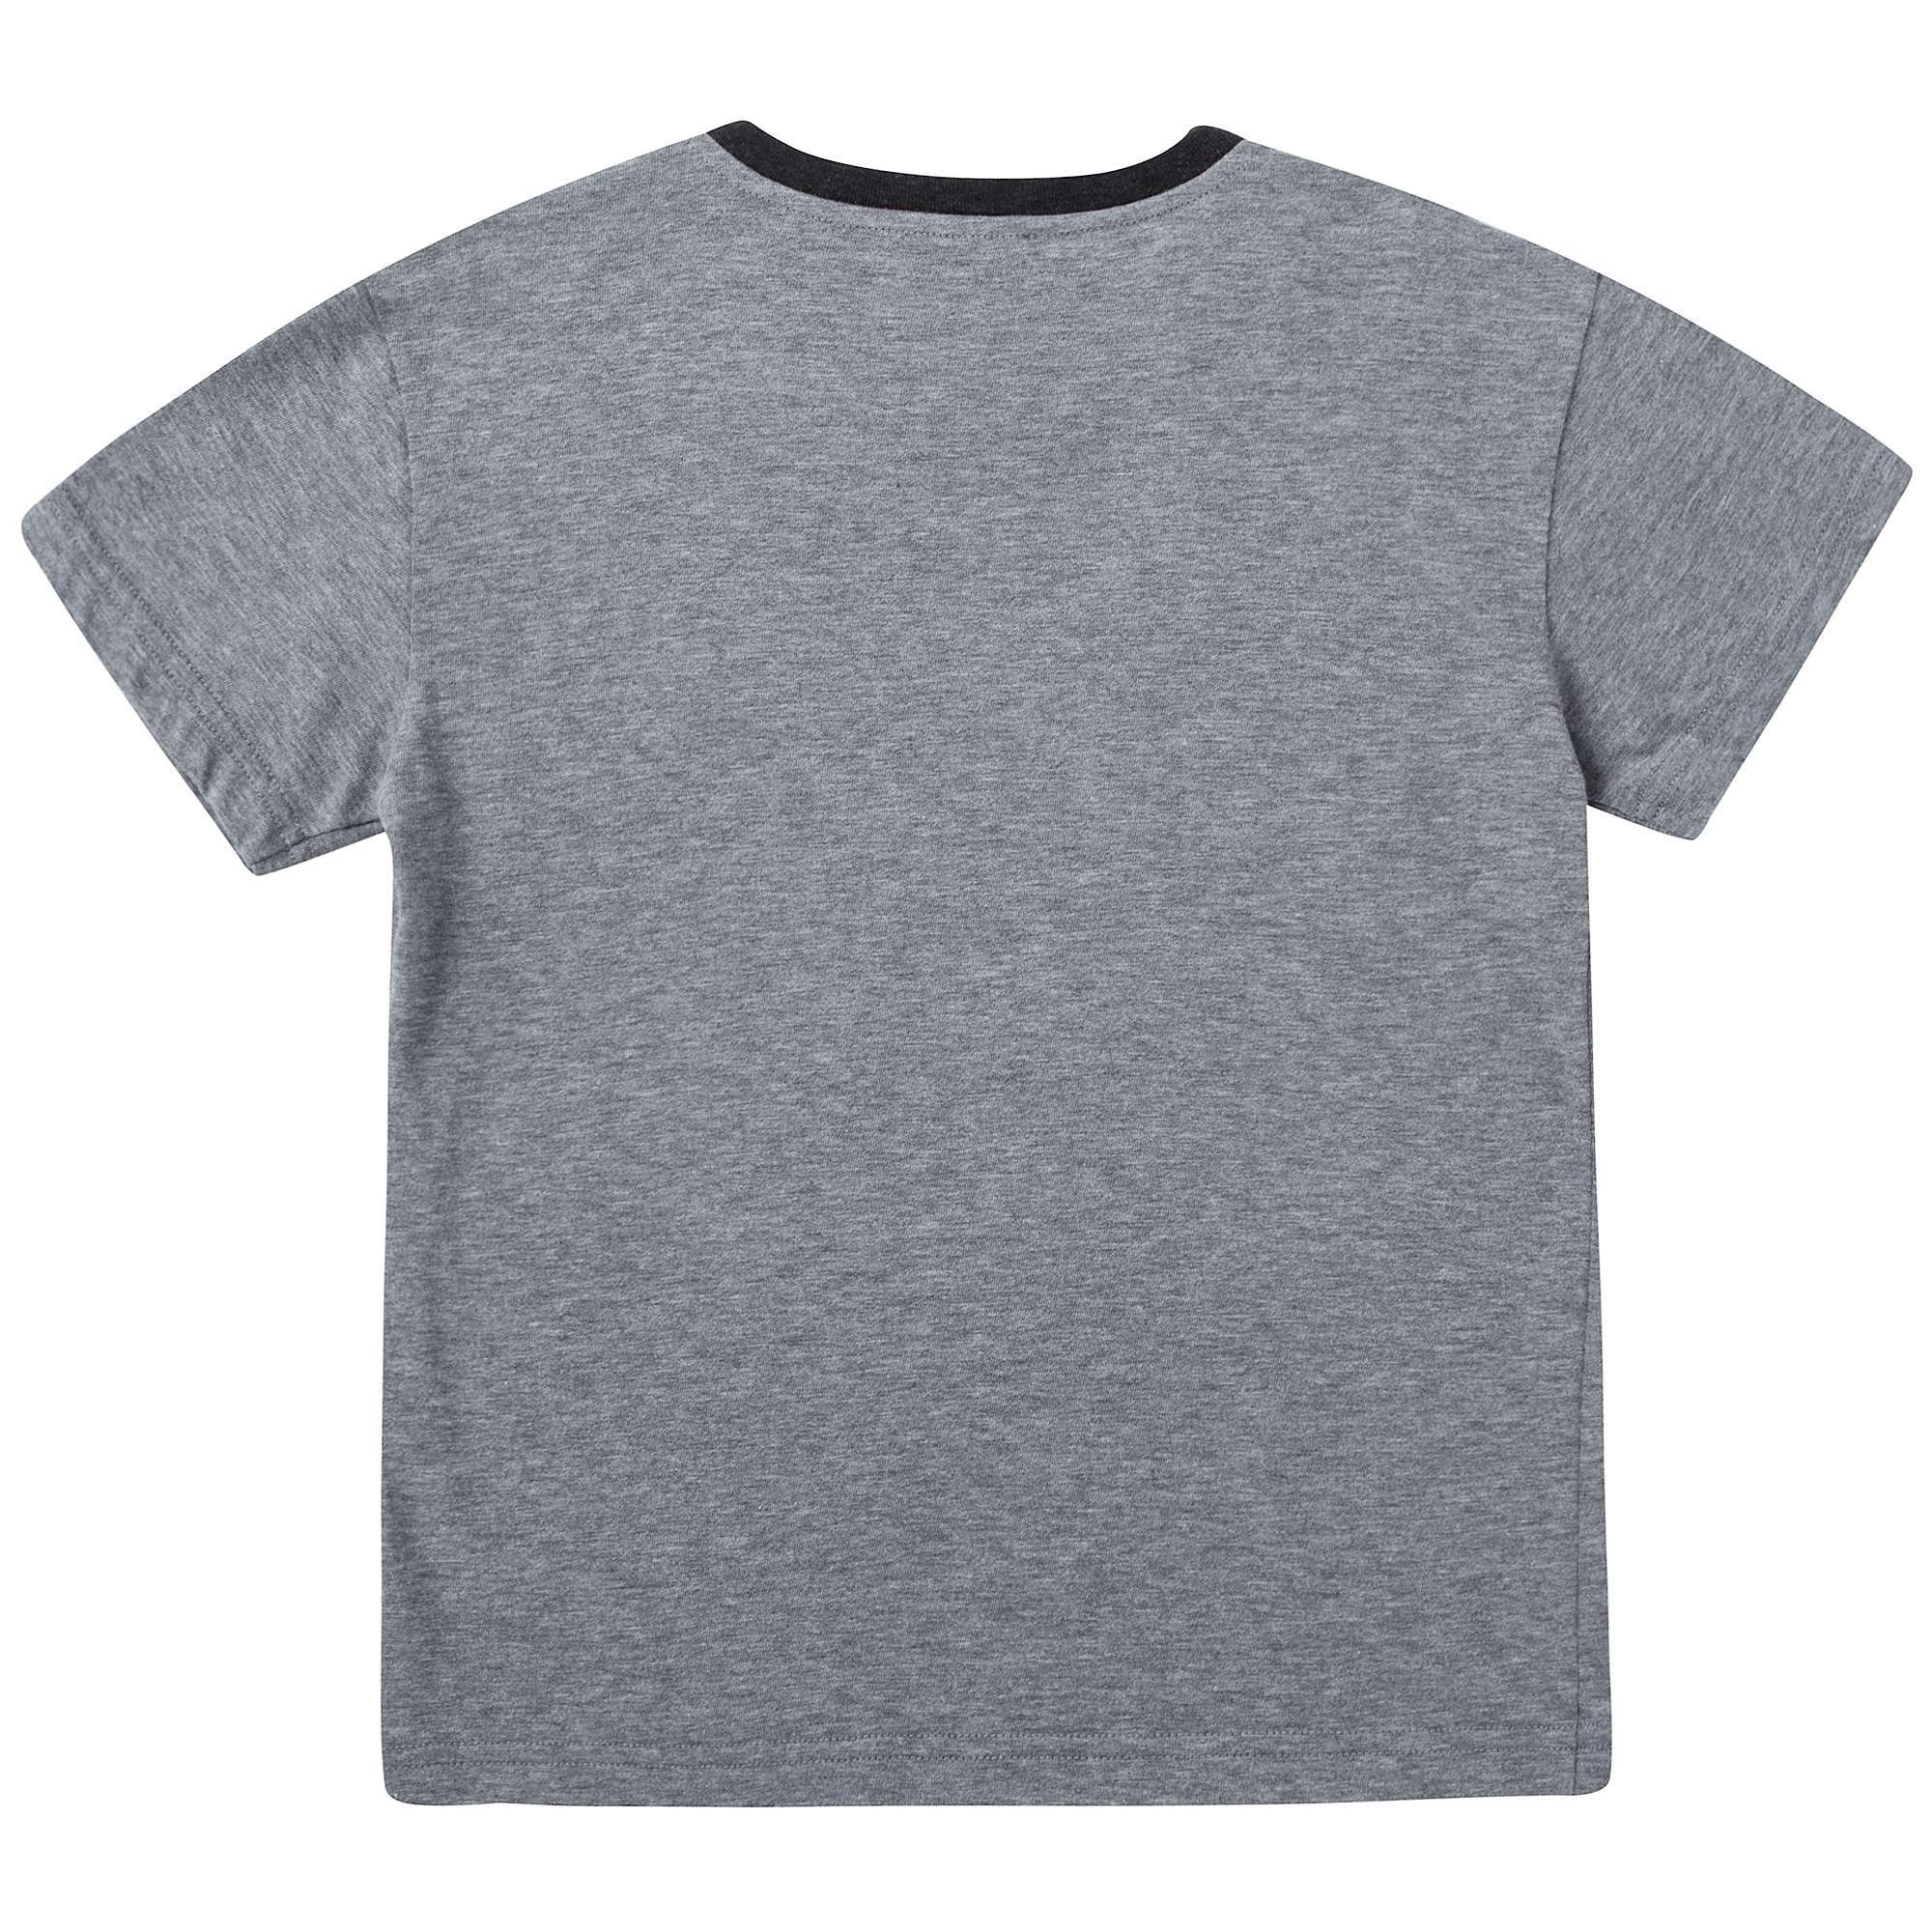 Boys Gray Printing T-Shirt